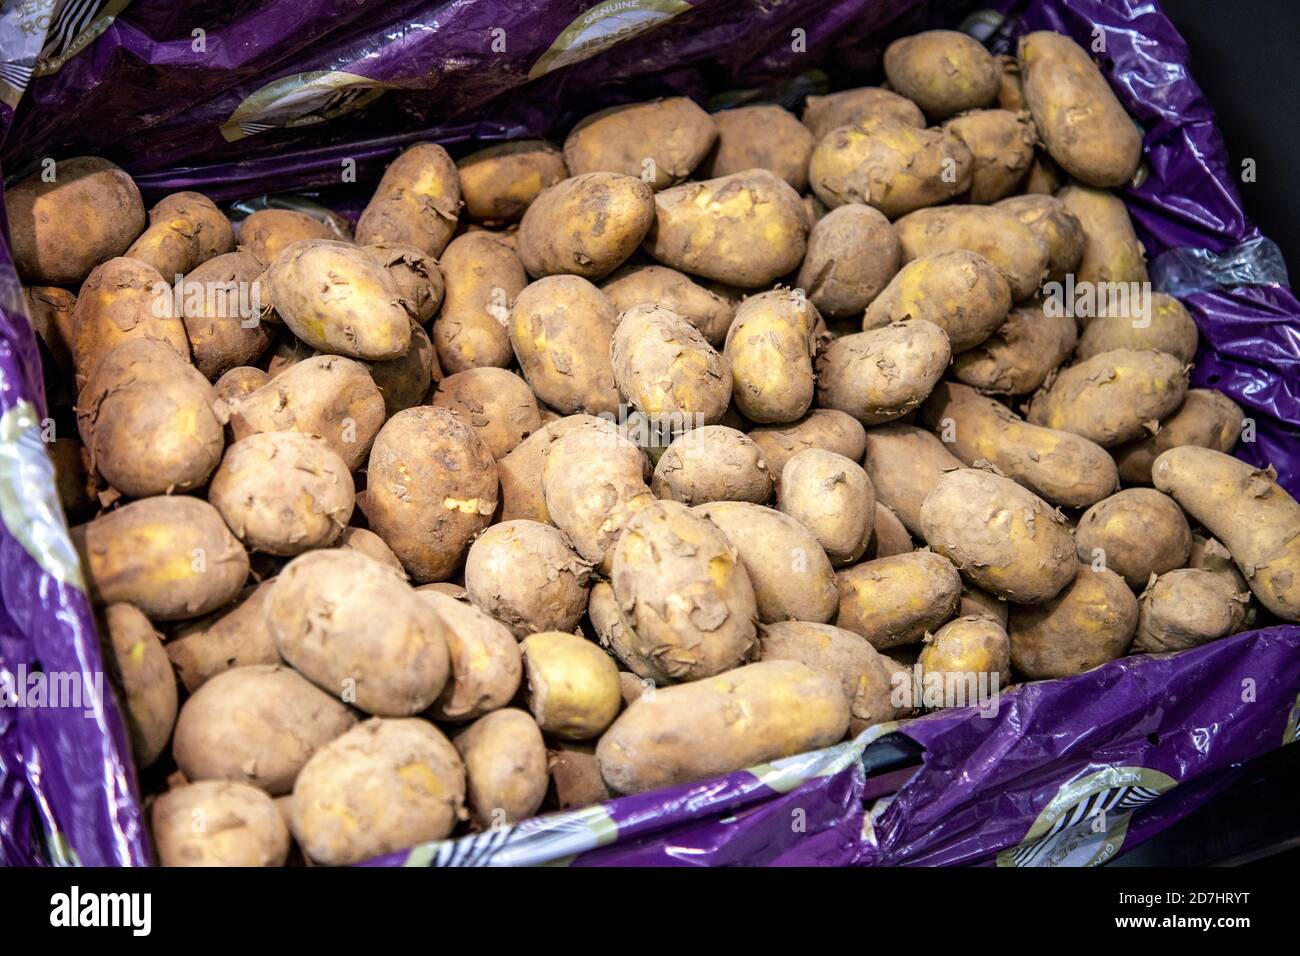 jersey royal potatoes asda